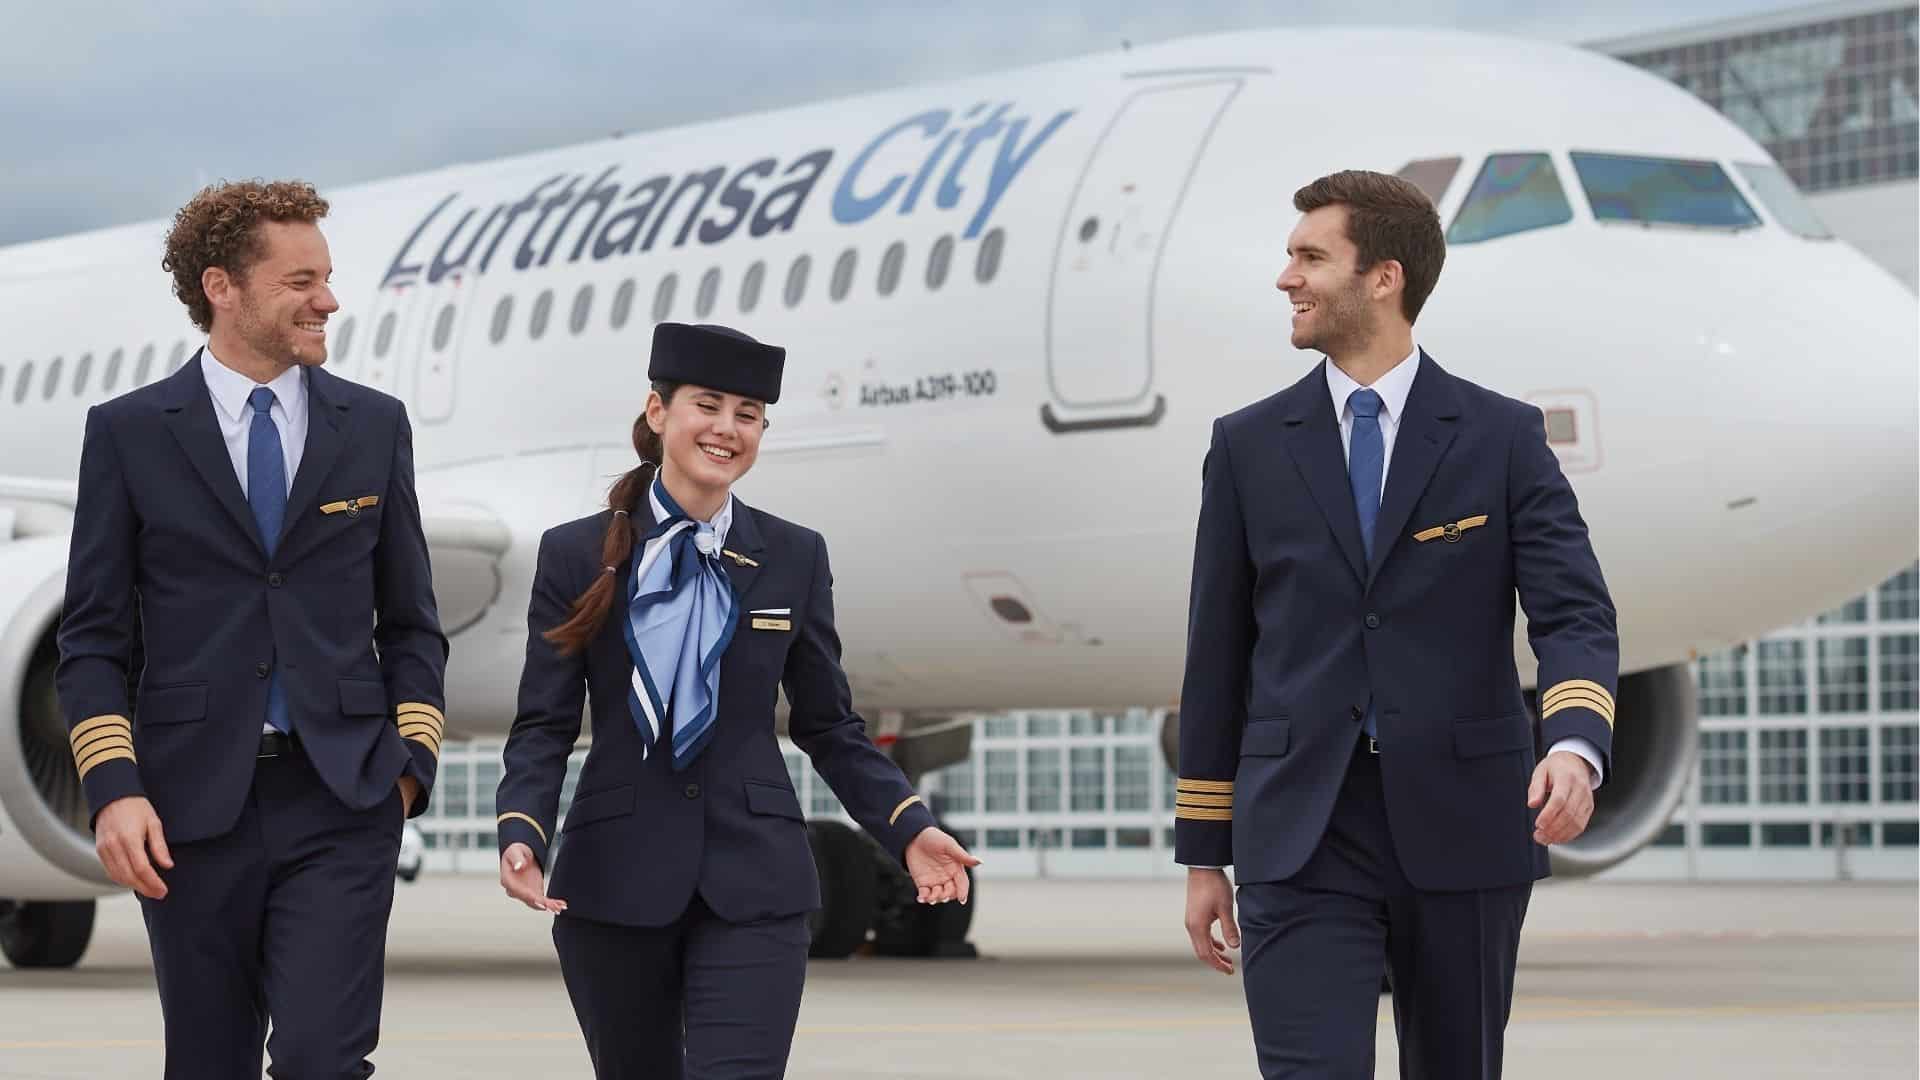 Lufthansa City Airlines Crew